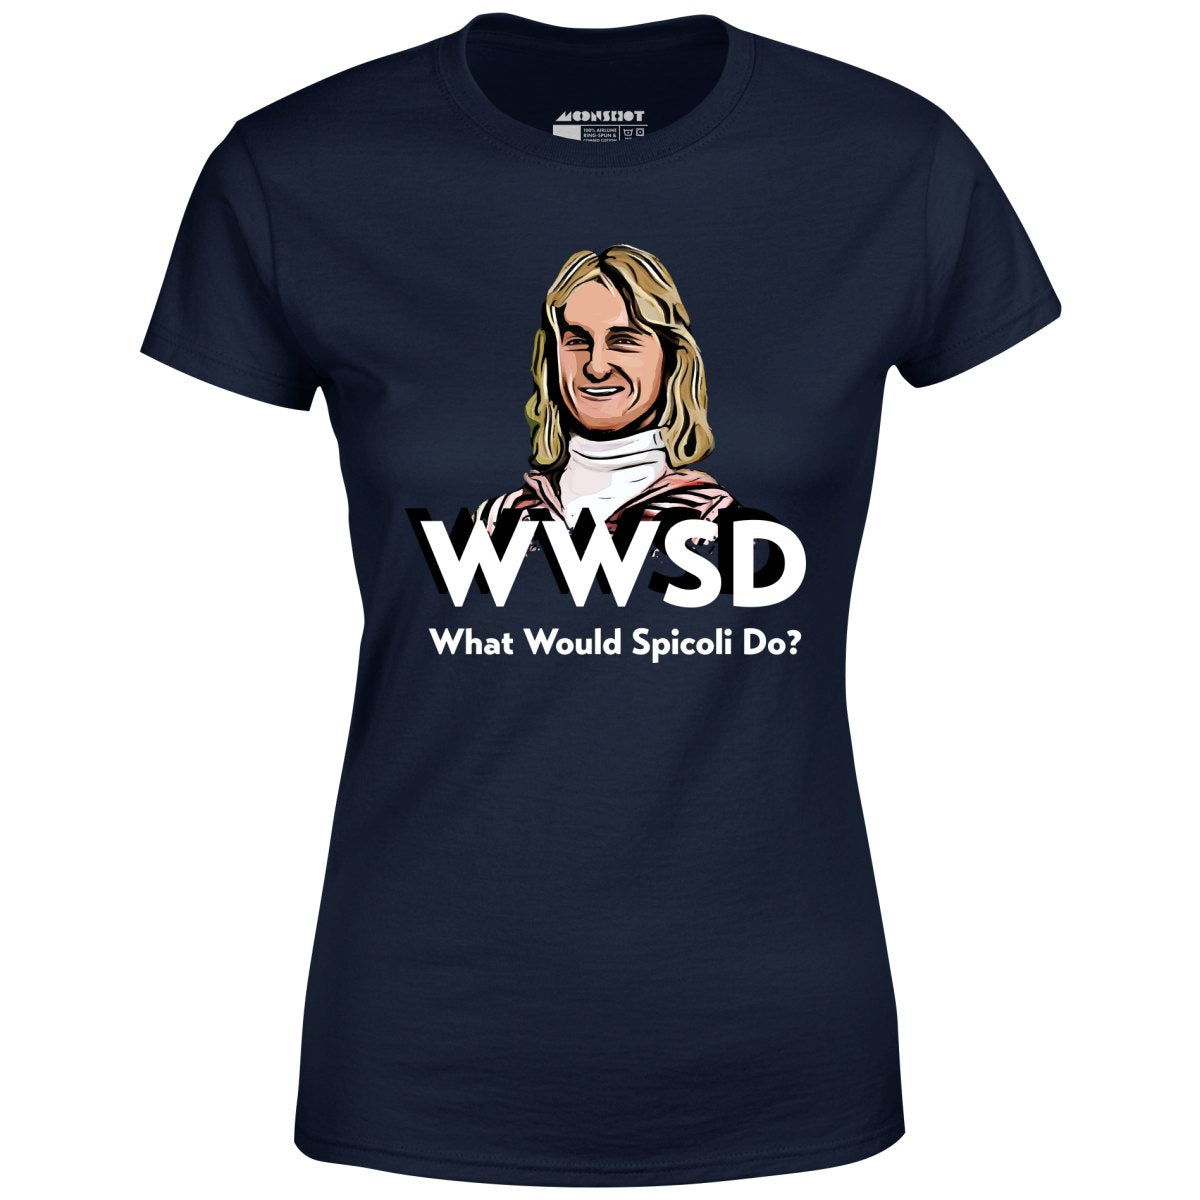 What Would Spicoli Do? - Women's T-Shirt